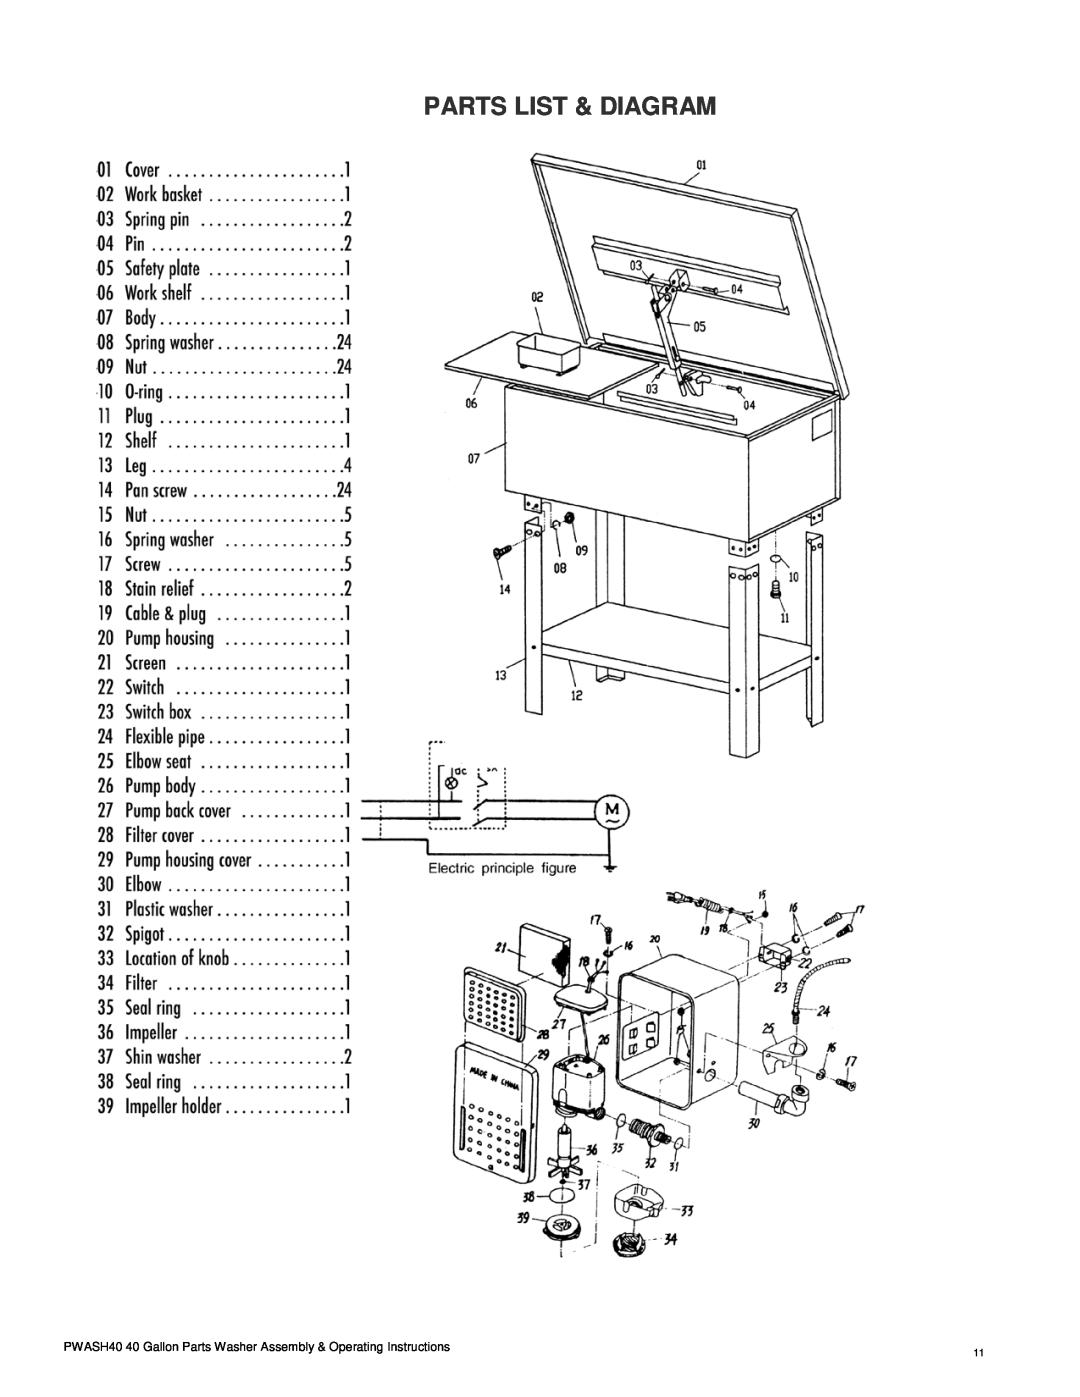 Buffalo Technology PWASH40201407 warranty Parts List & Diagram 